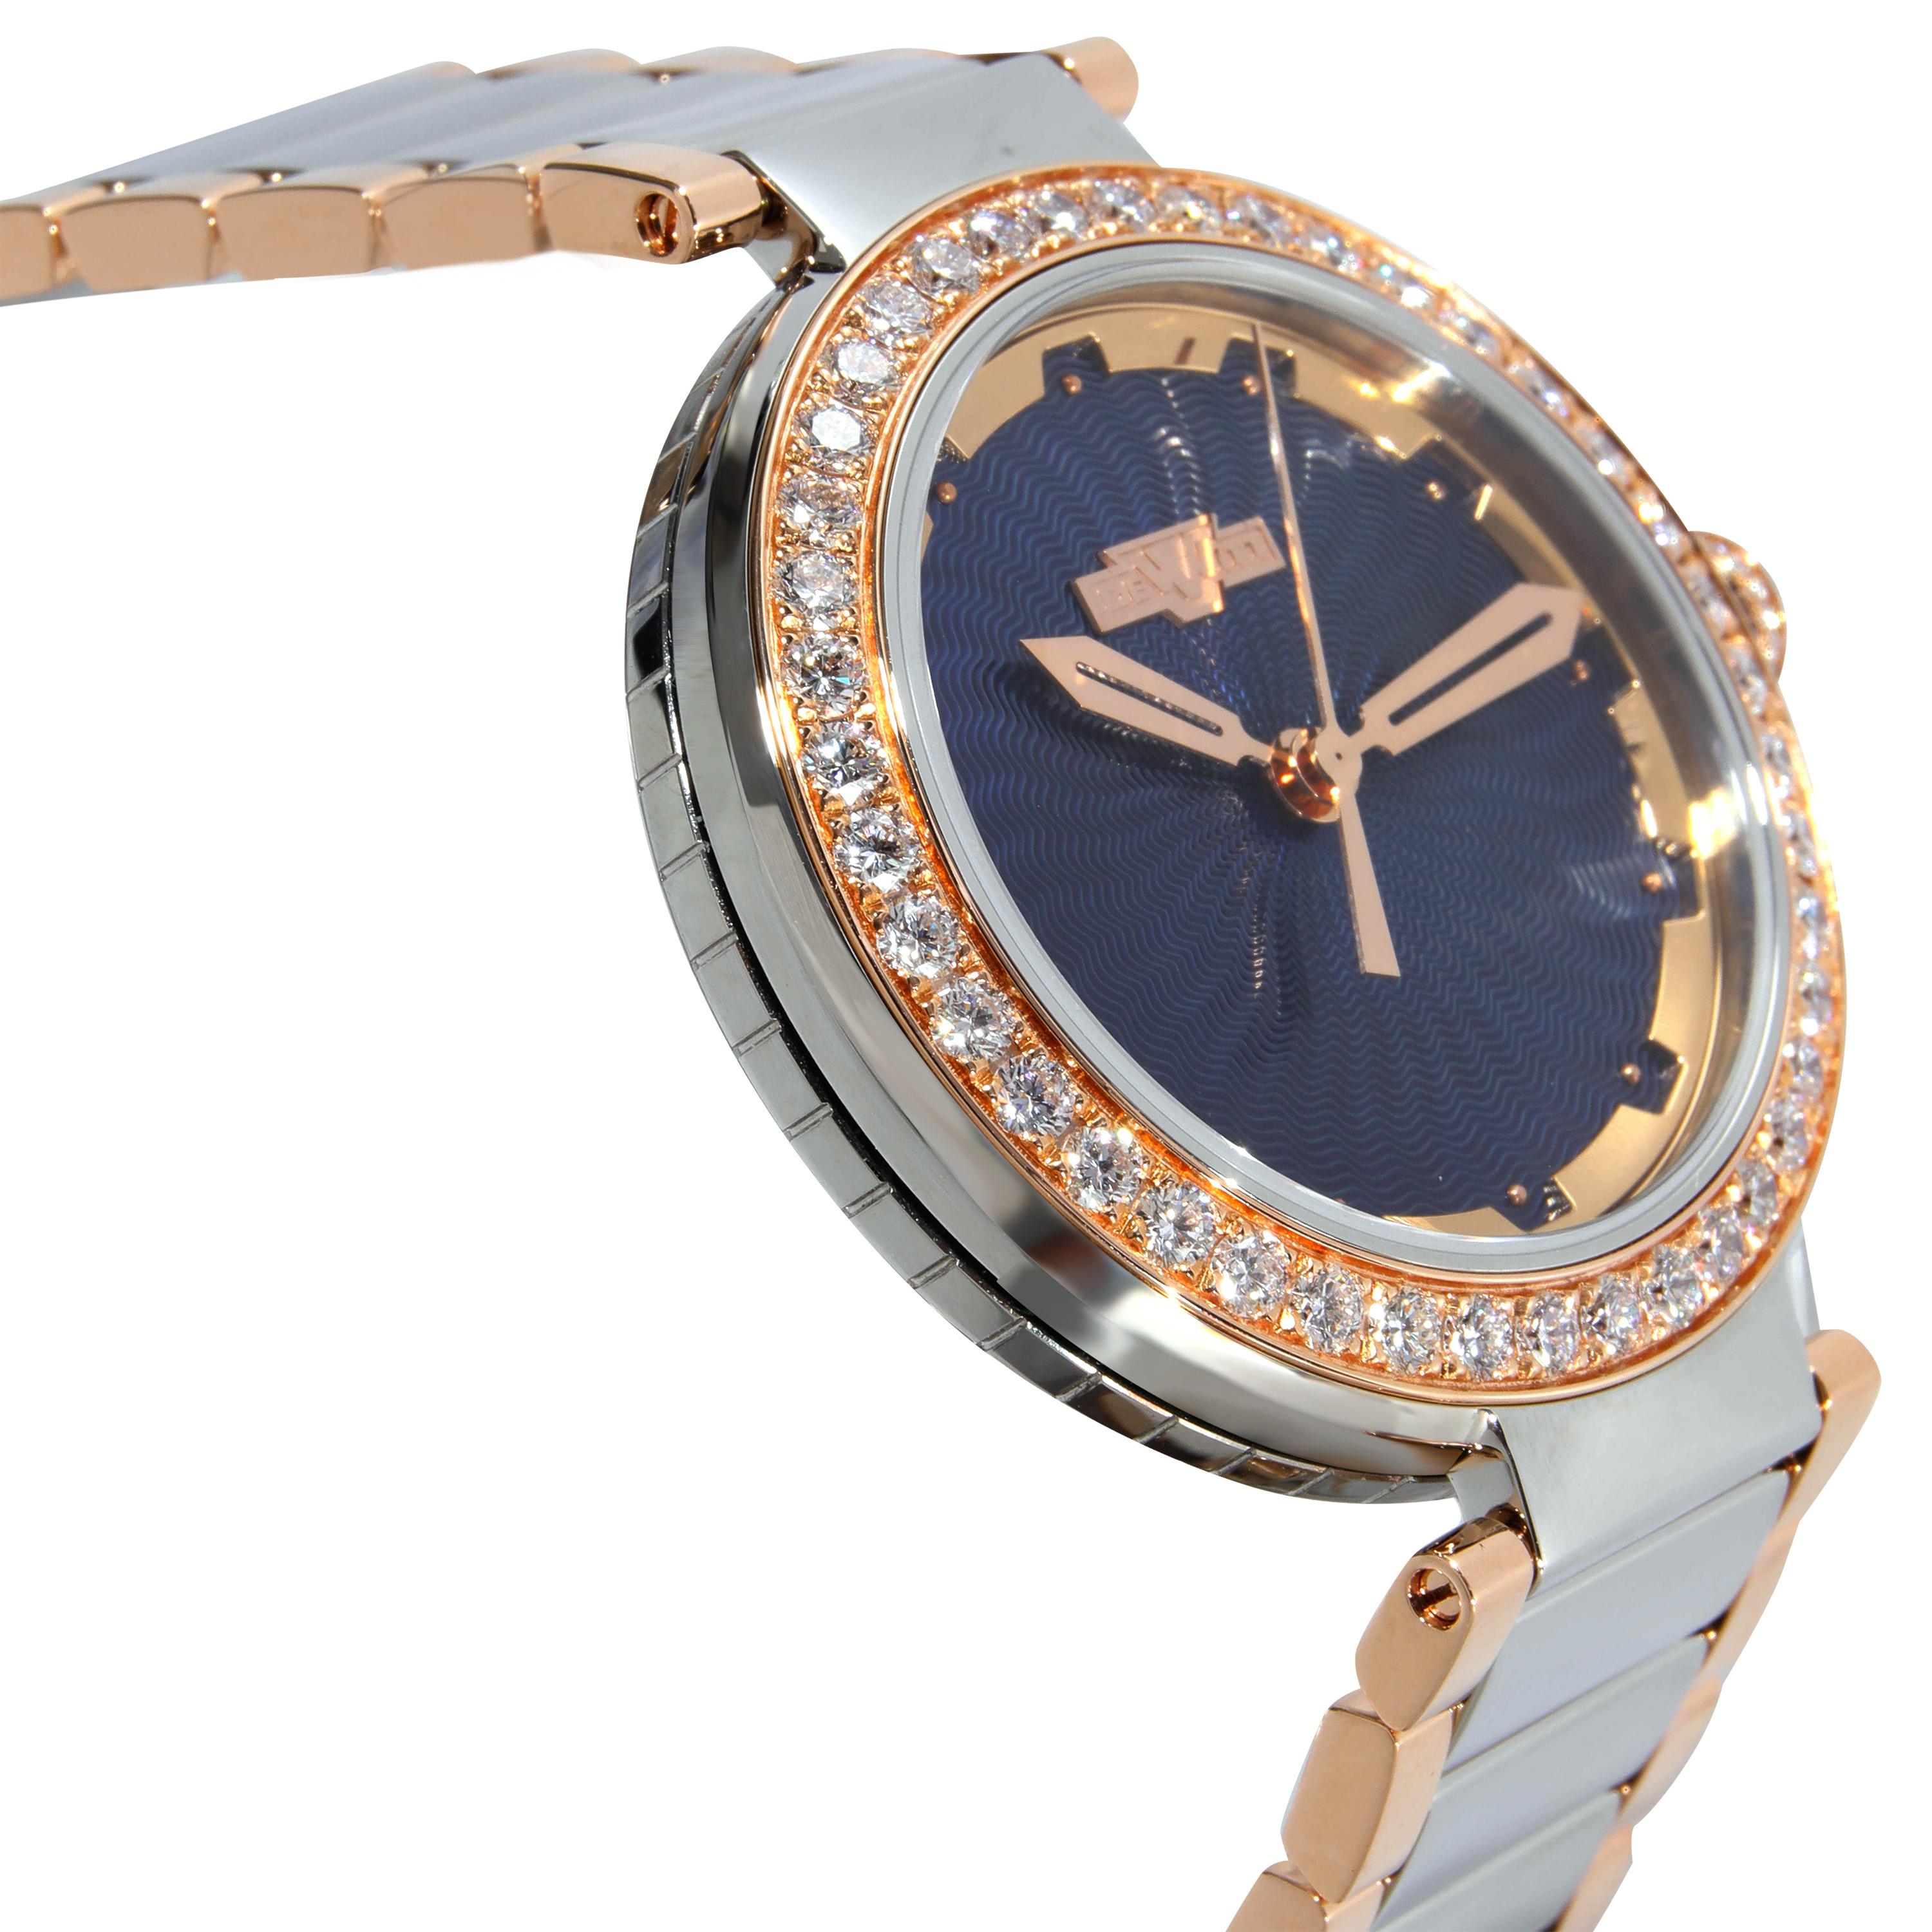 DeWitt Blue Empire BEM.QZ.001 Unisex Watch in 18kt Stainless Steel/Rose Gold For Sale 1